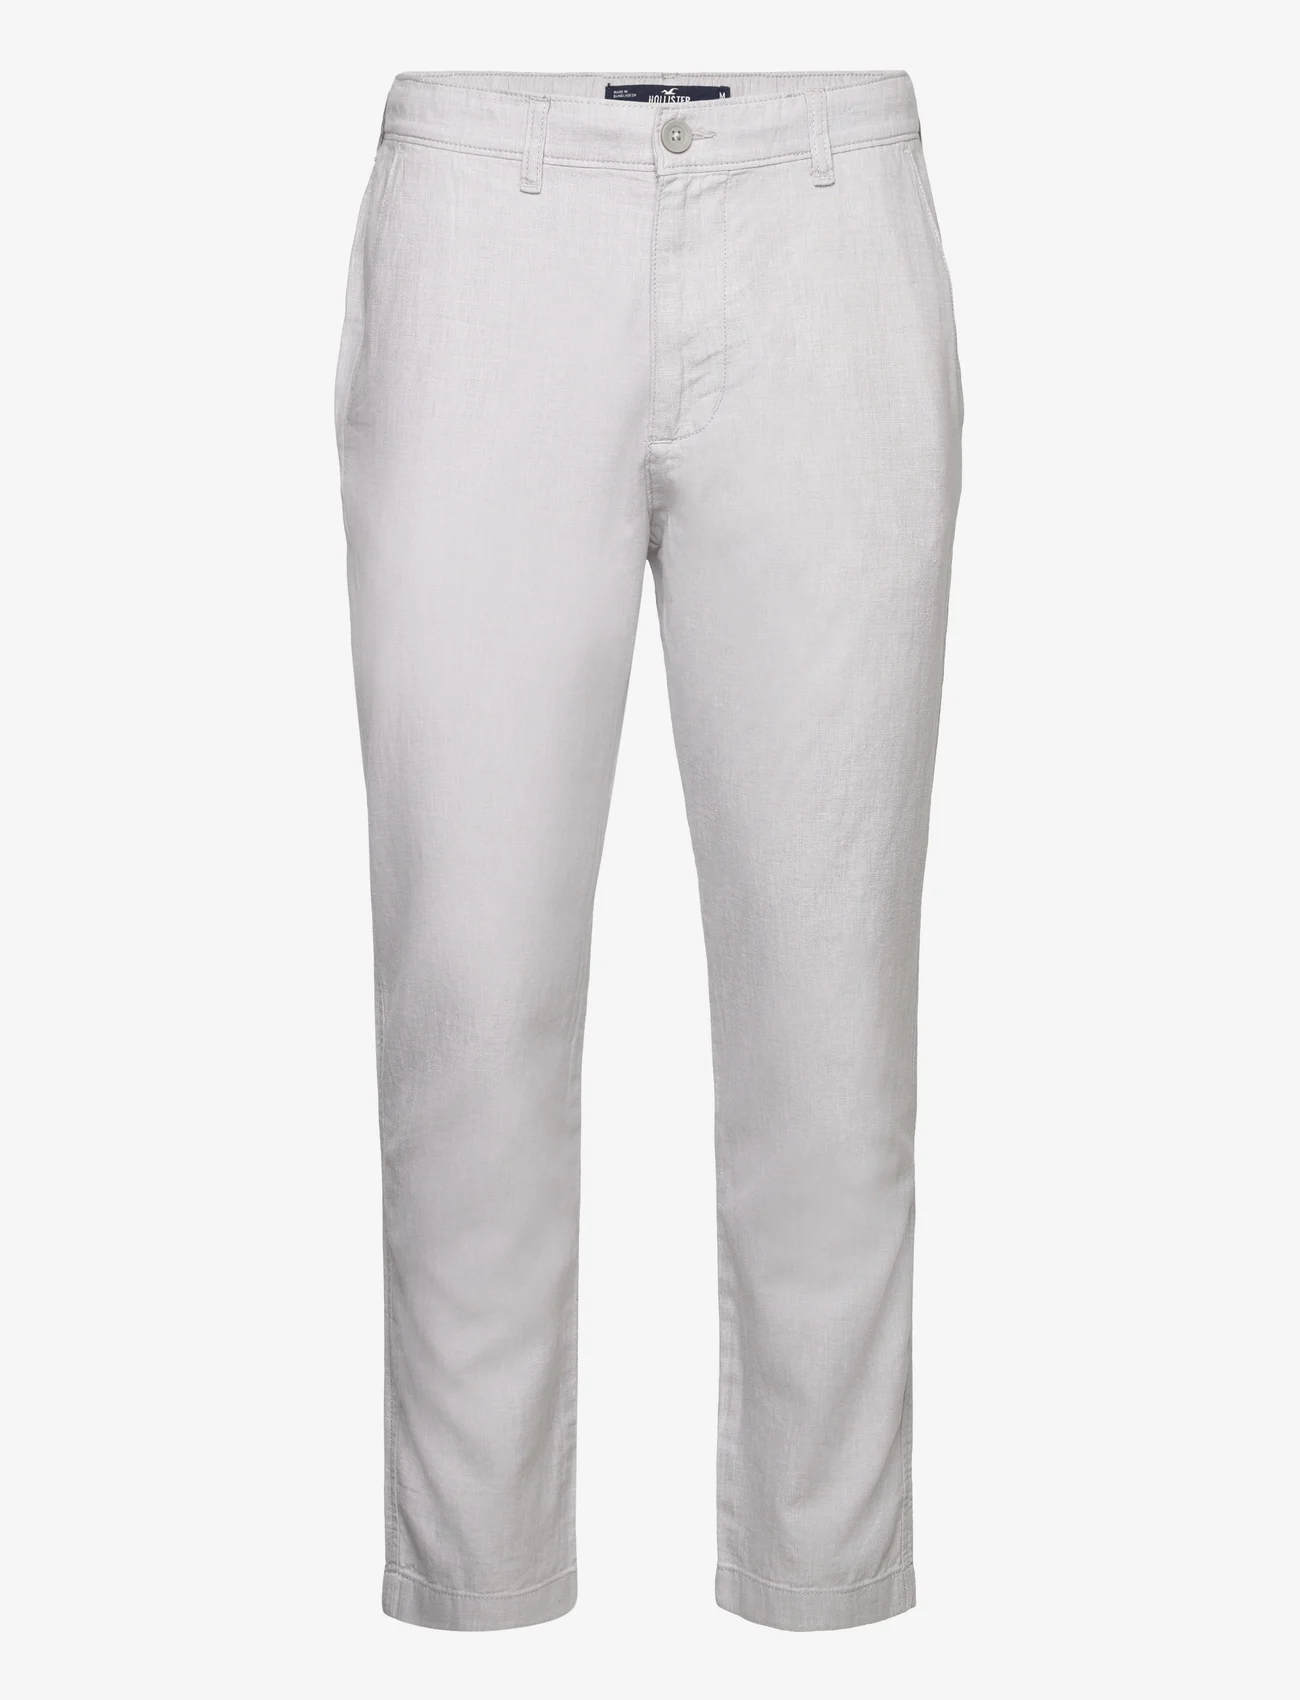 Hollister - HCo. GUYS PANTS - chino stila bikses - light grey - 0